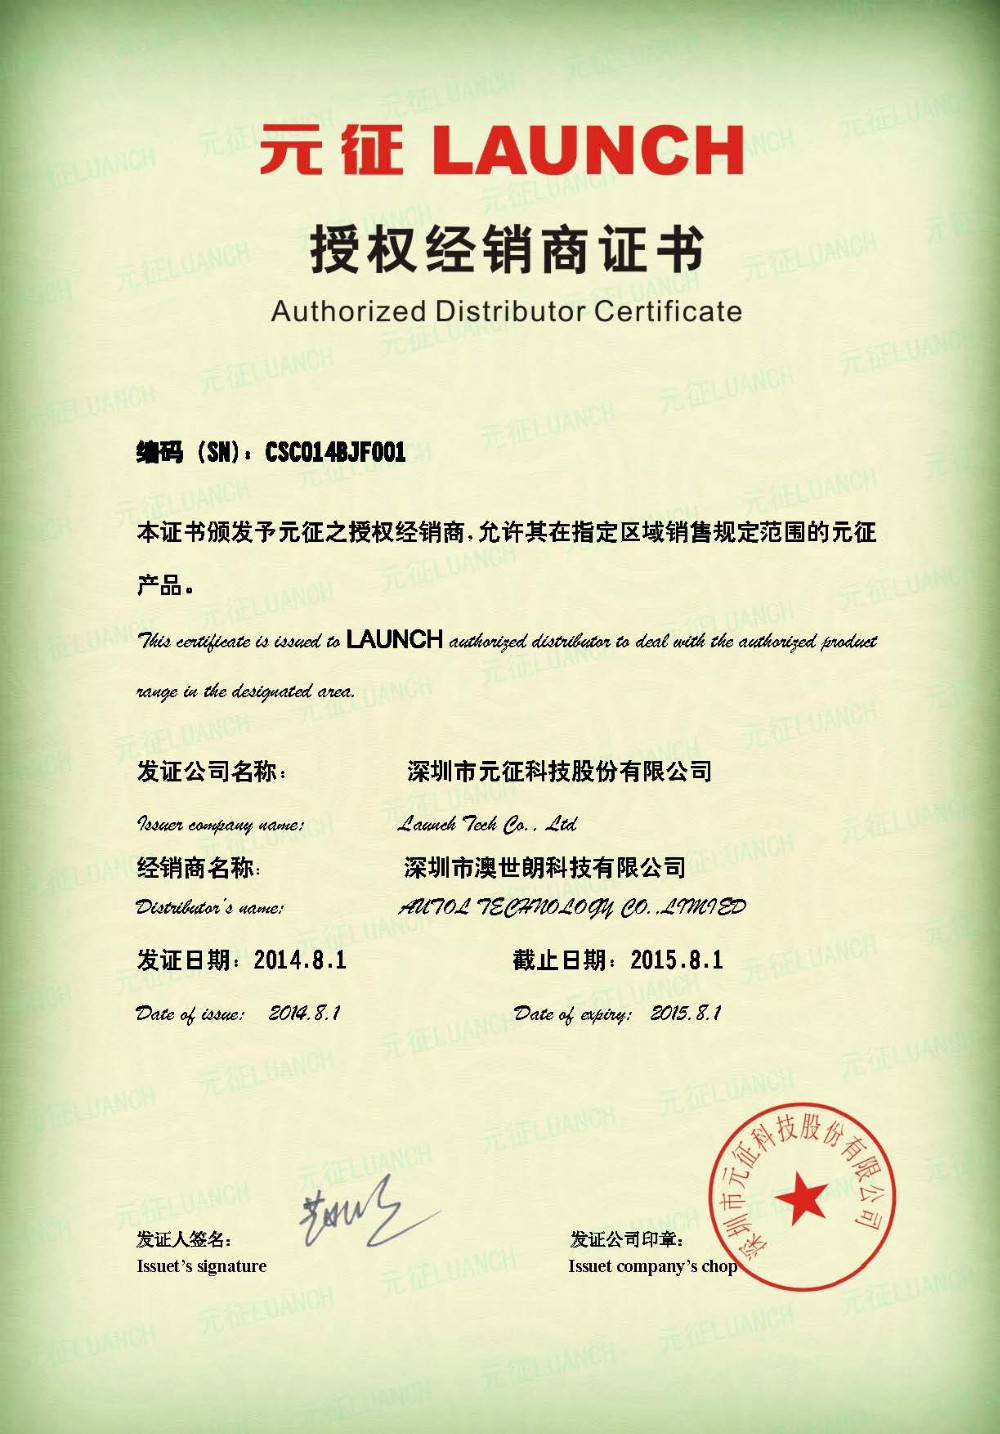 Authorized Distributor Certificate(AUTOL)